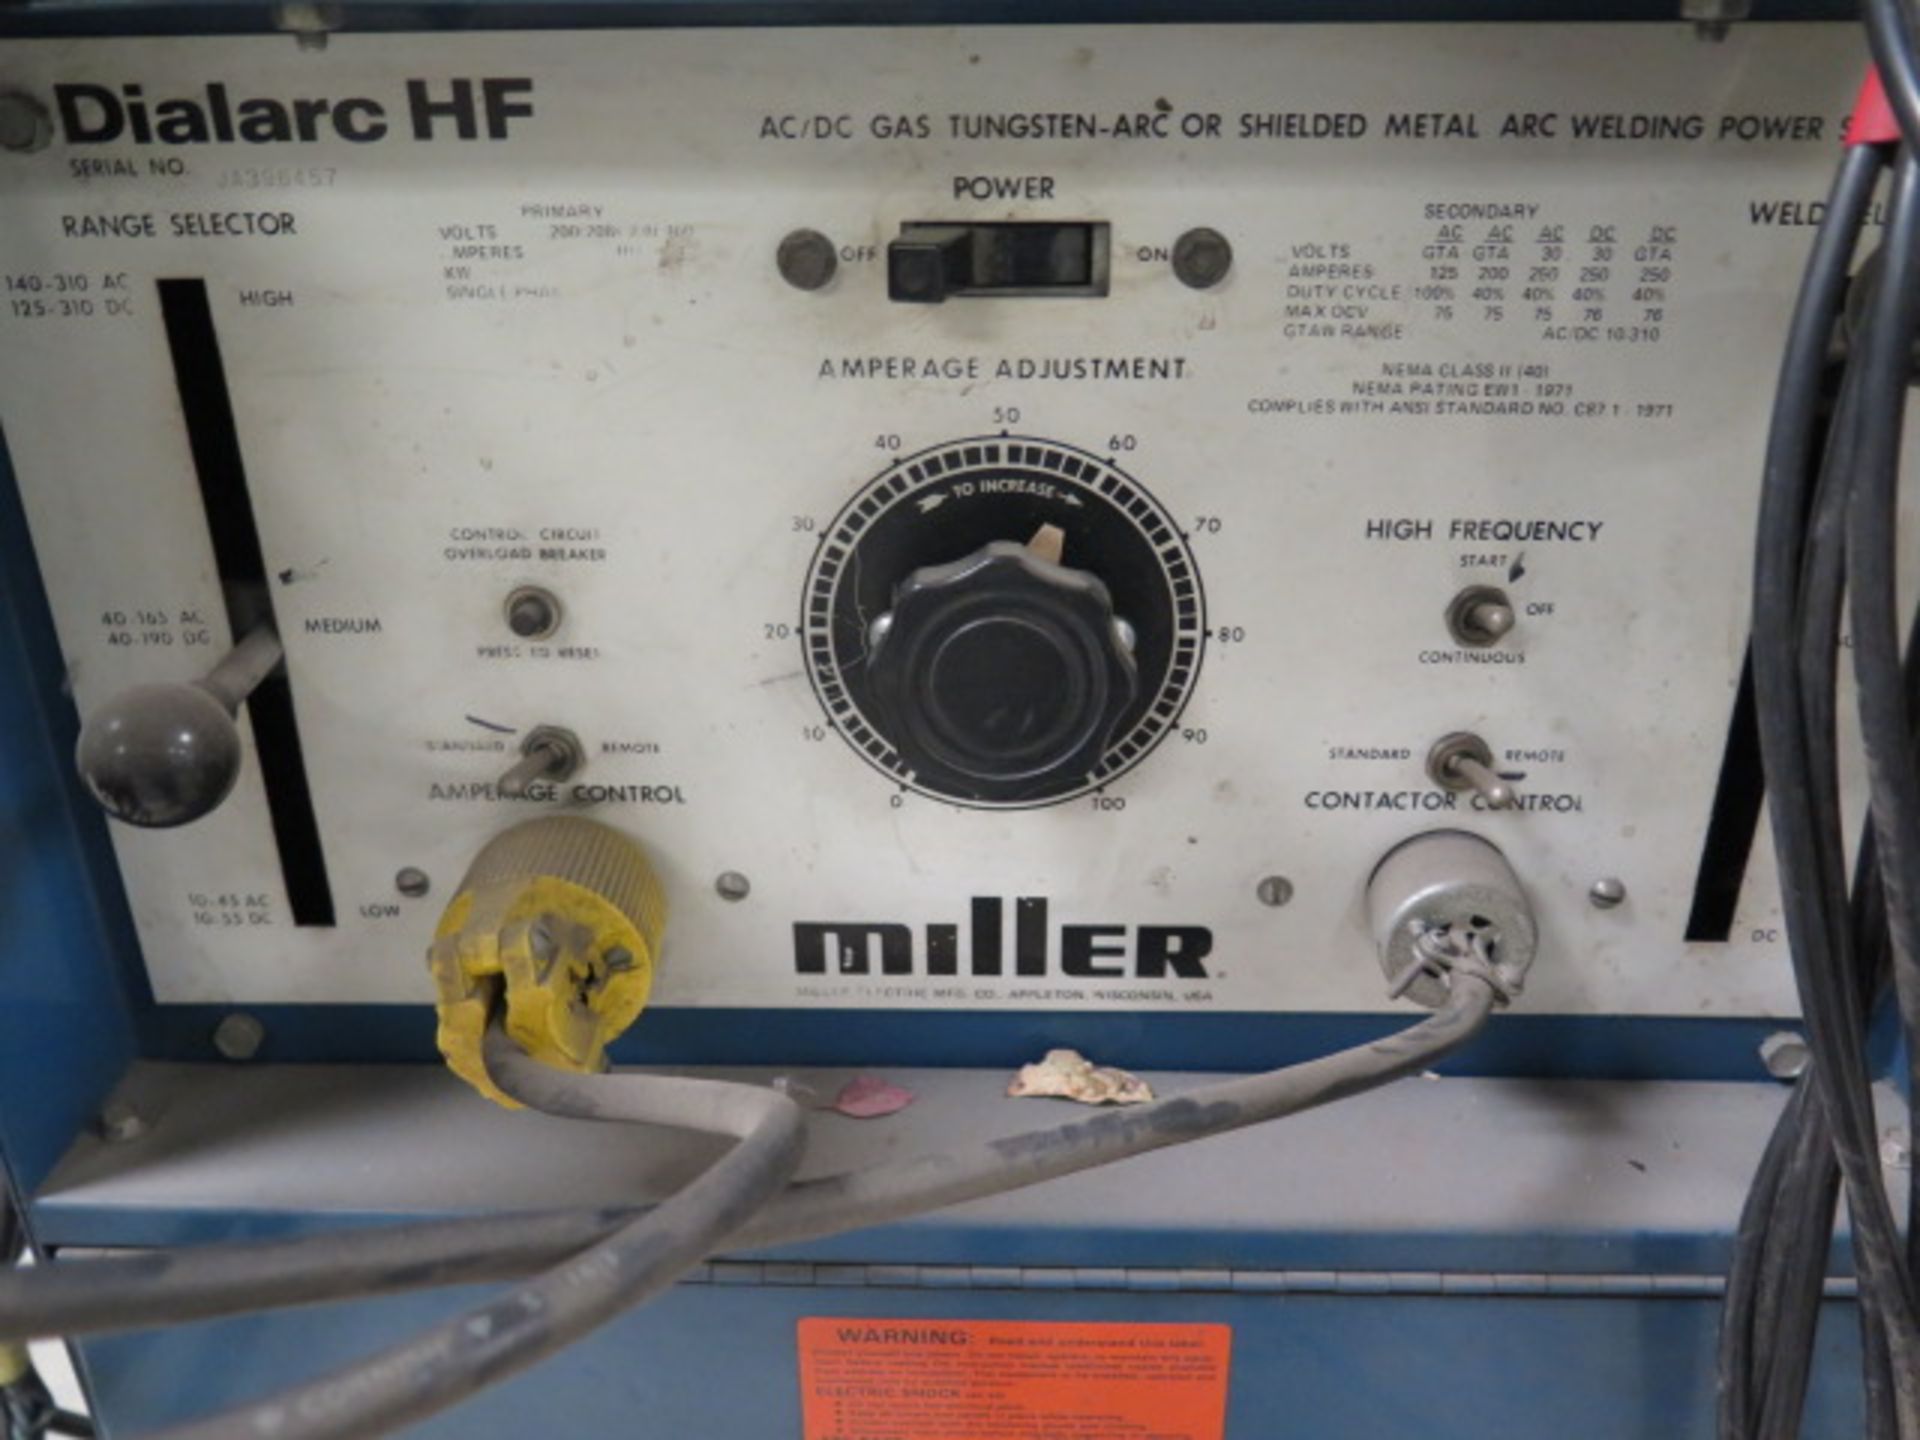 Miller Dialarc HF Arc welding Power Source (SOLD AS-IS - NO WARRANTY) - Image 6 of 7